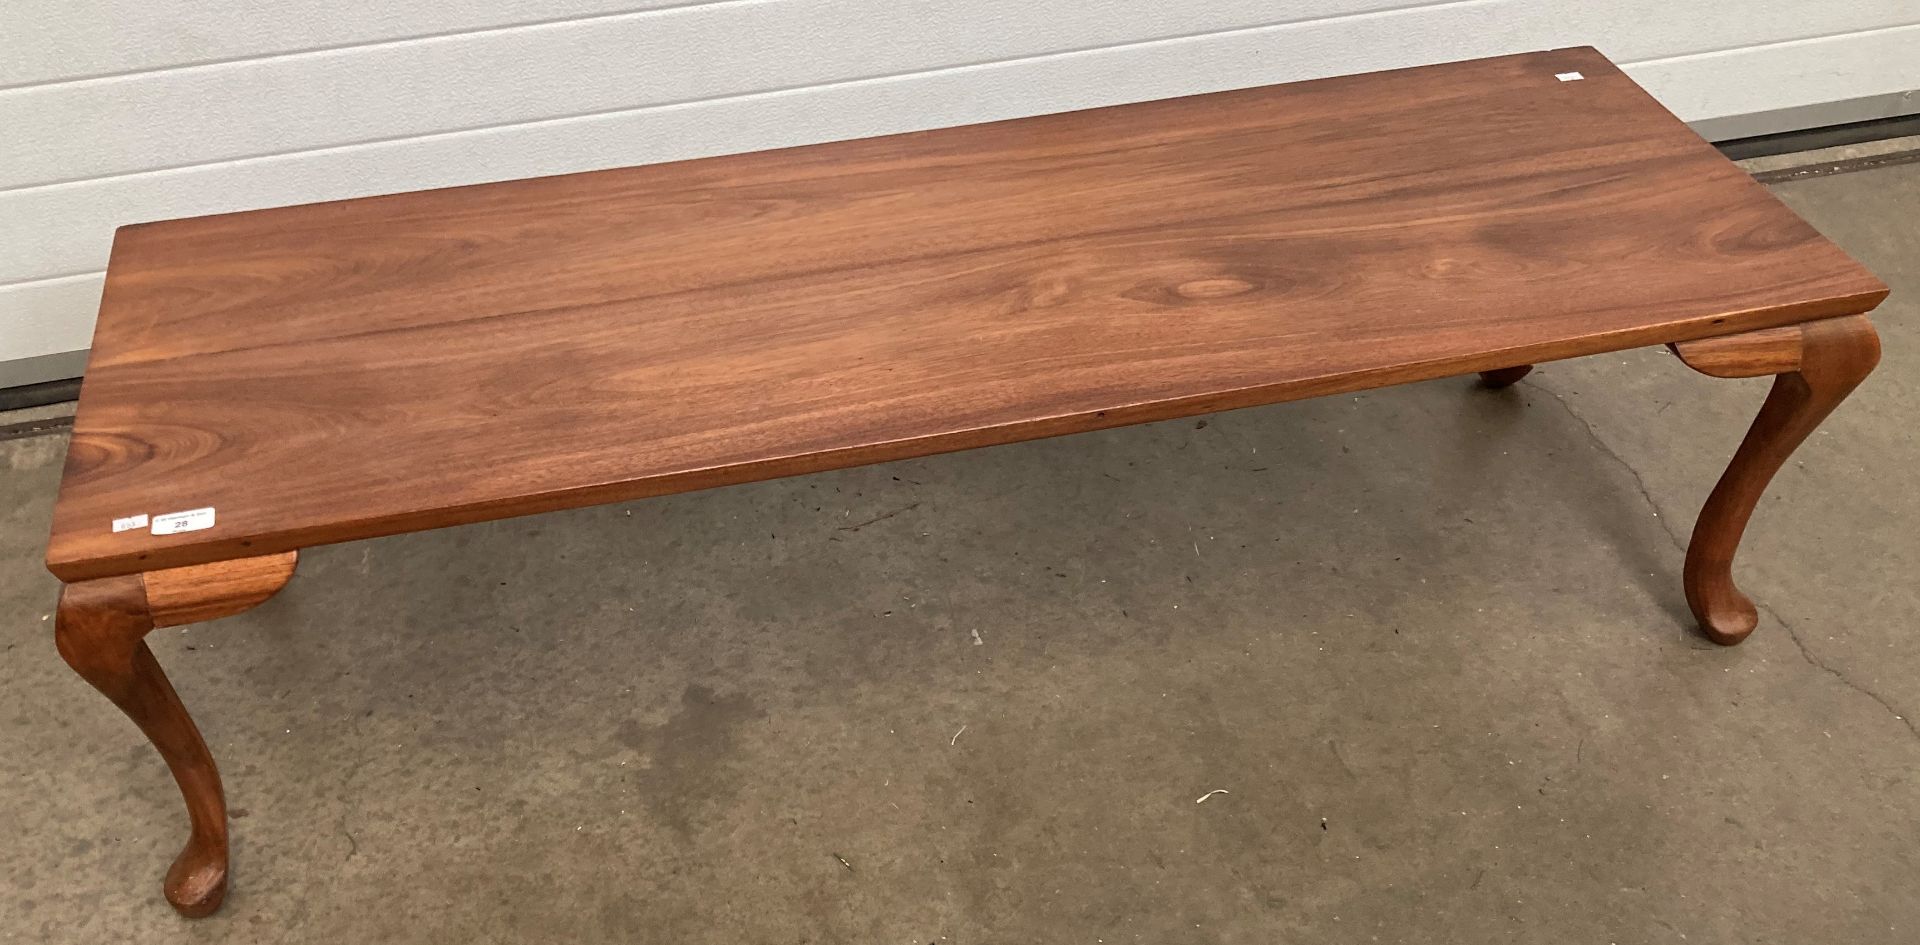 A rectangular wooden coffee table 128cm x 43cm